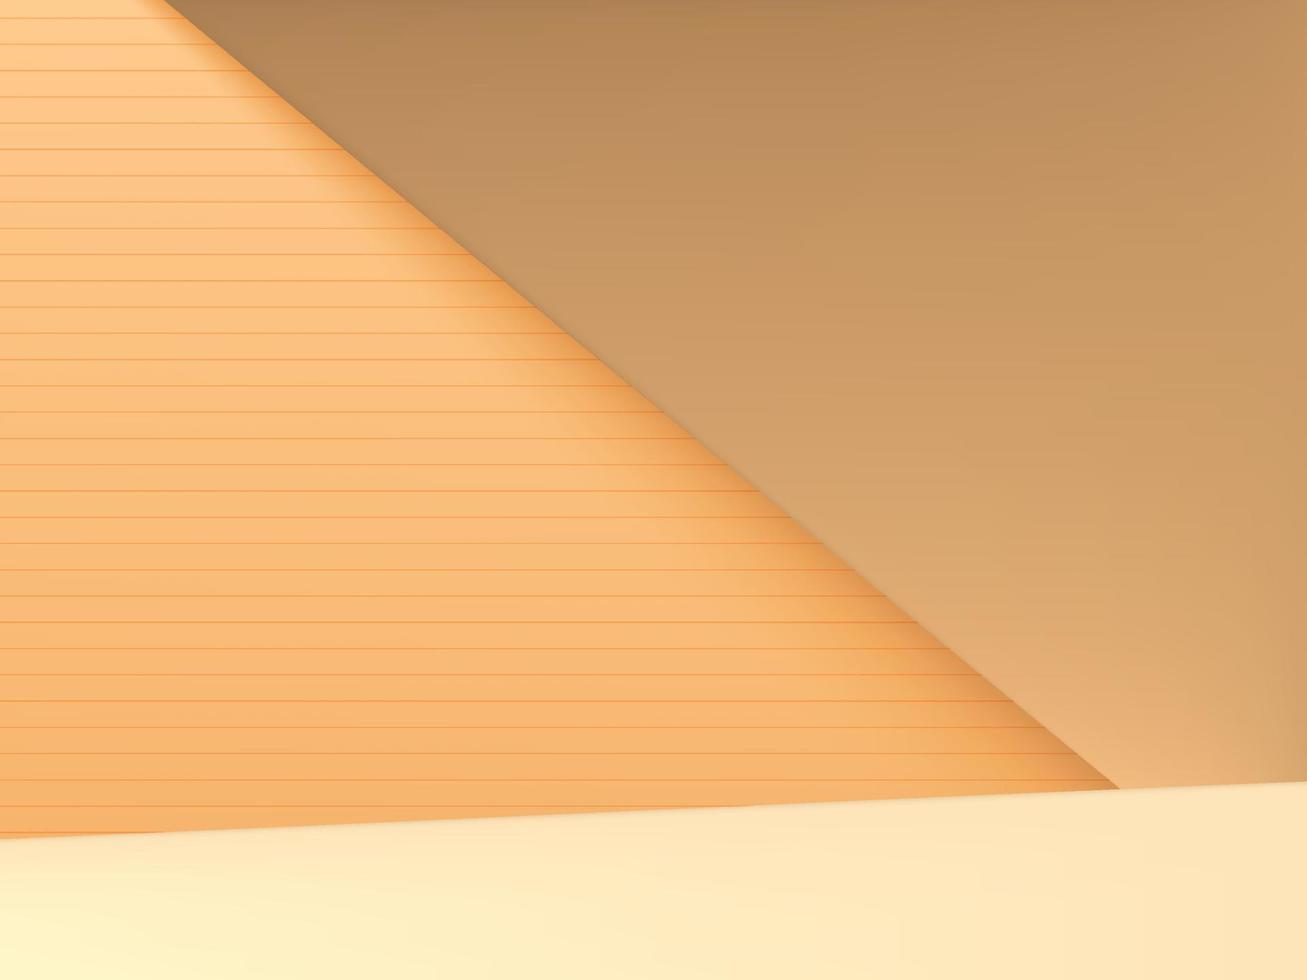 Vector Minimal Studio Shot Geometric Background for Product Display, Pastel Orange and Yellow